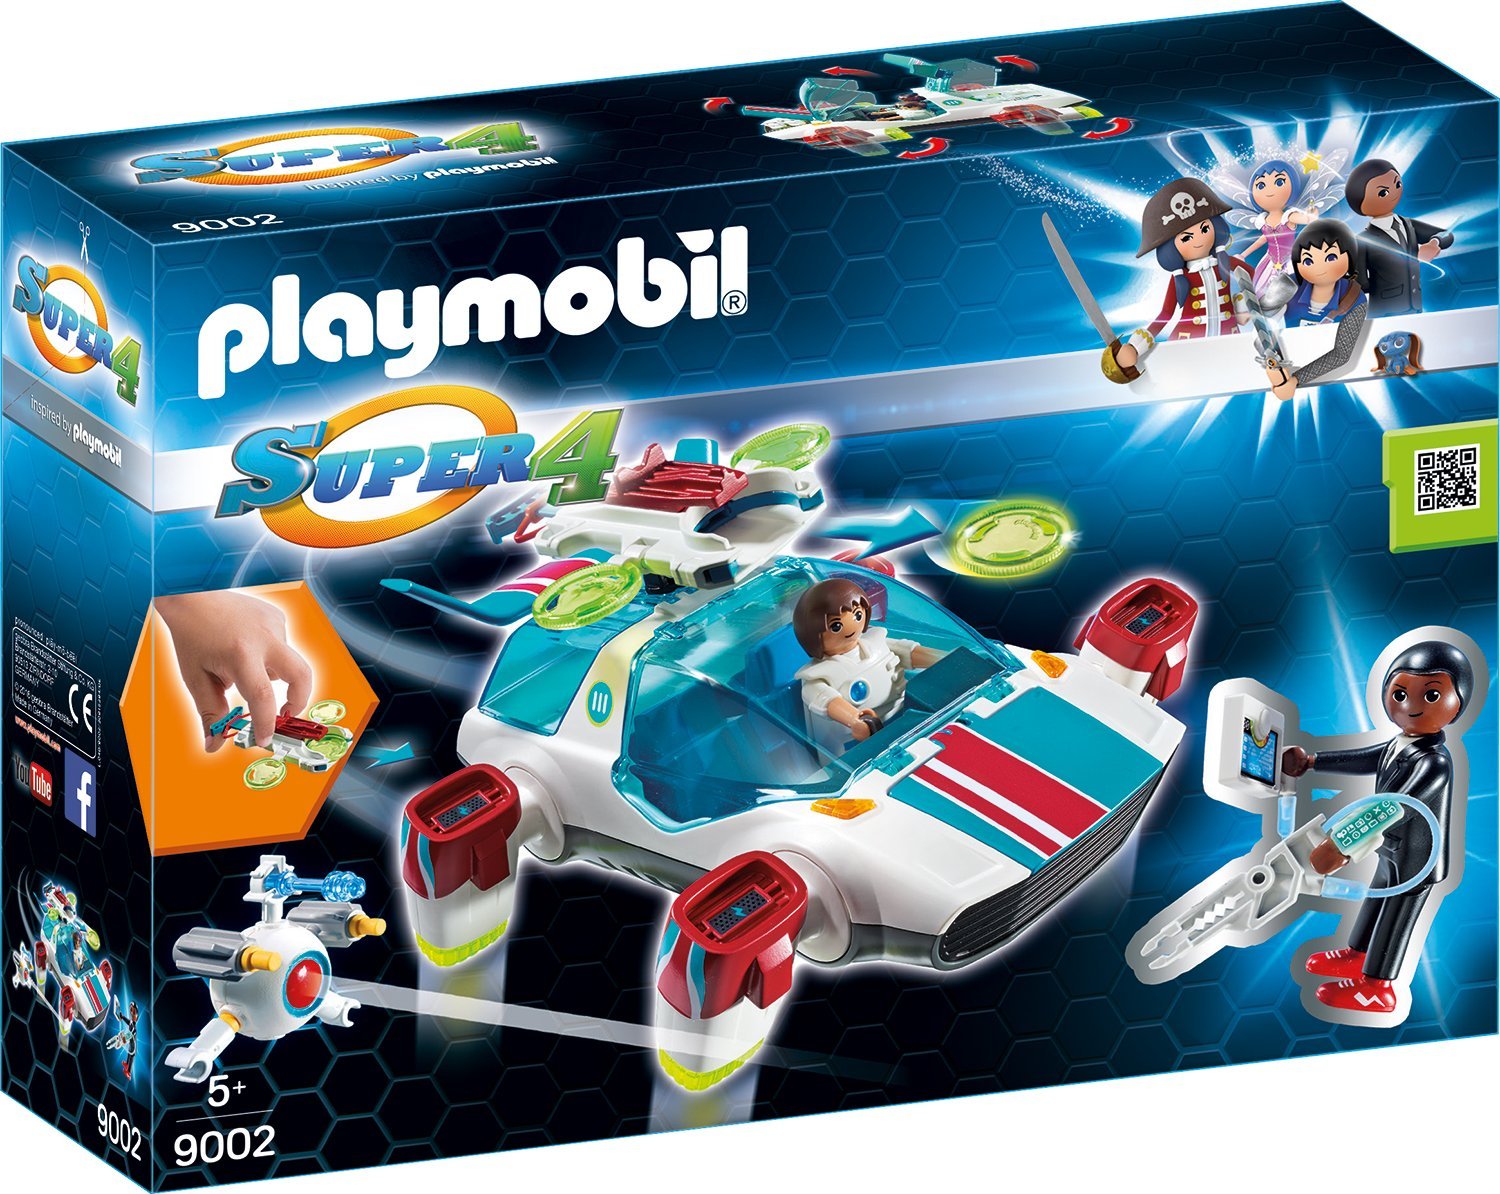 Playmobil 9002 - FulguriX mit Agent Gene (Super4)